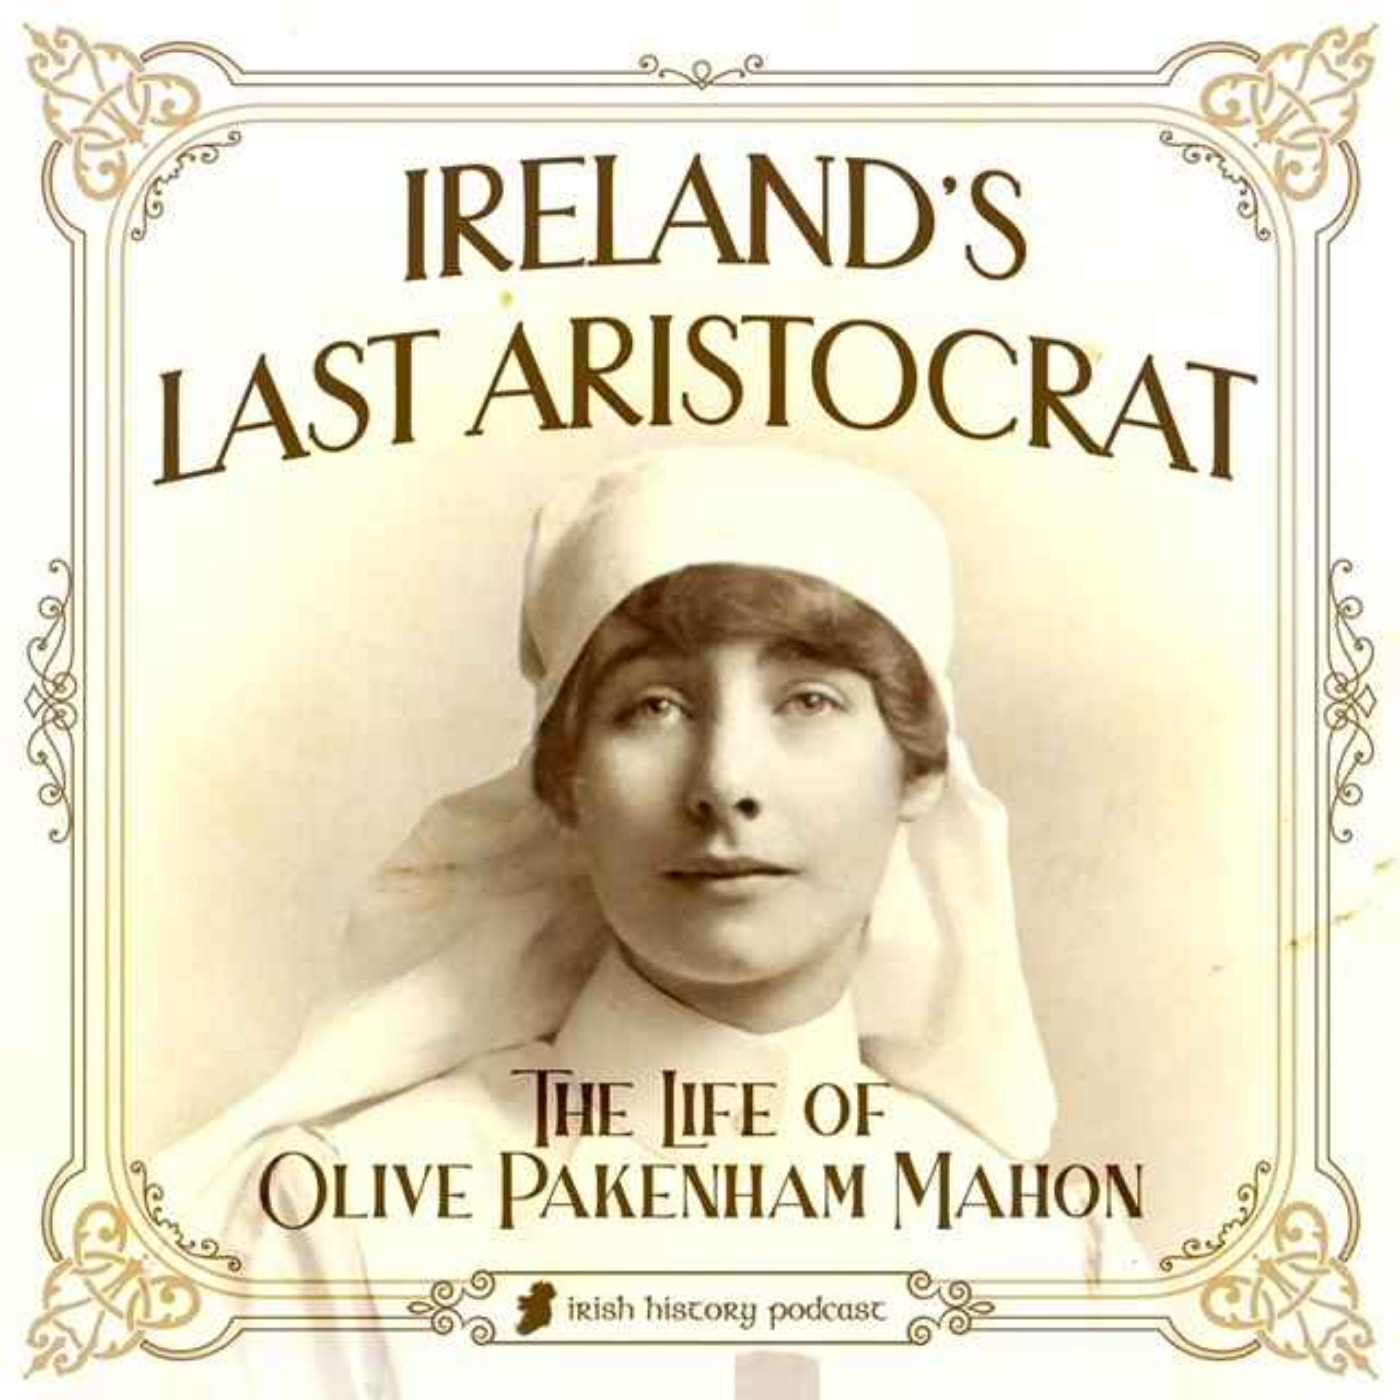 [Coming Weds 21st] Ireland’s Last Aristocrat - the Life of Olive Pakenham Mahon